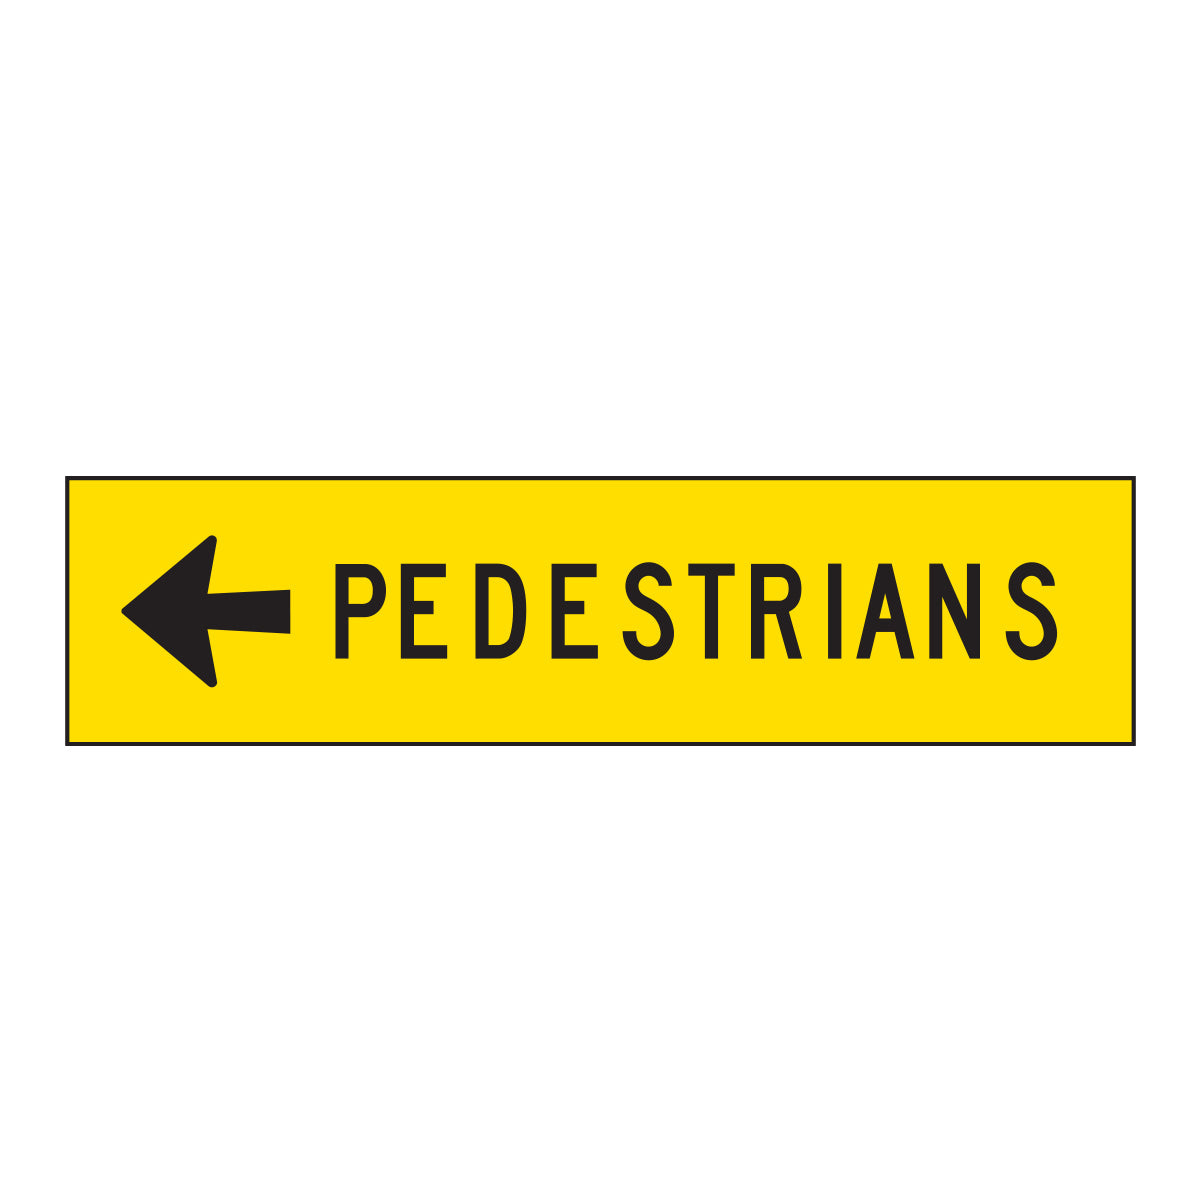 Warning: Pedestrians Left Sign